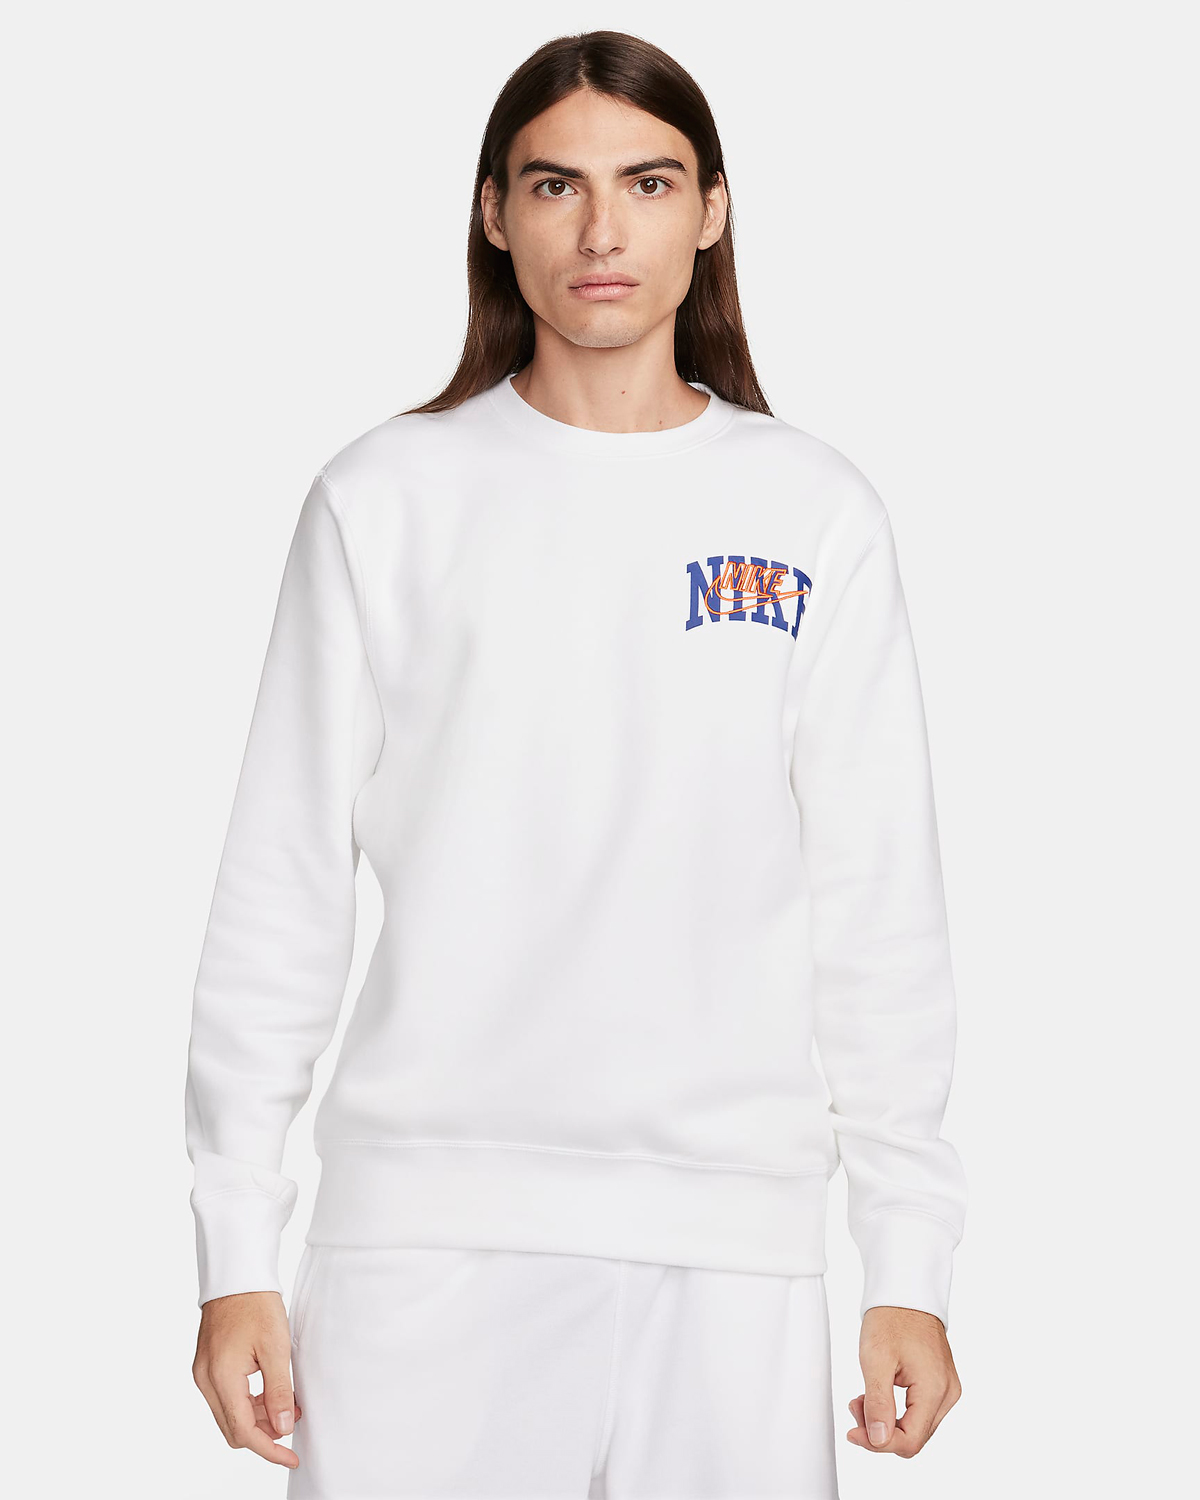 Nike-Club-Fleece-Crew-Sweatshirt-White-Royal-Blue-Orange-1